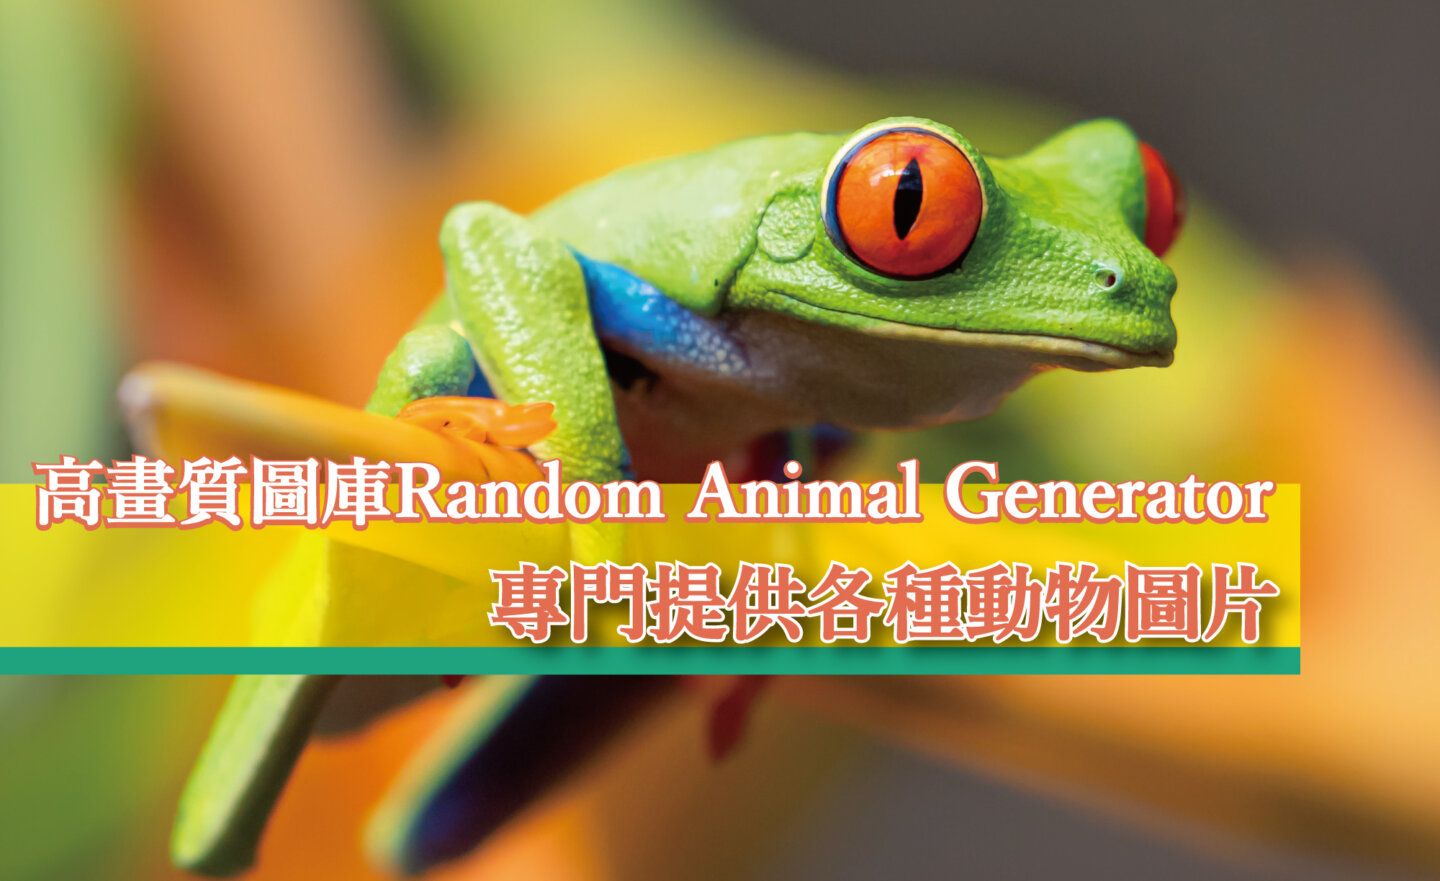 【免費】高畫質圖庫「Random Animal Generator」，專門提供各種動物圖片